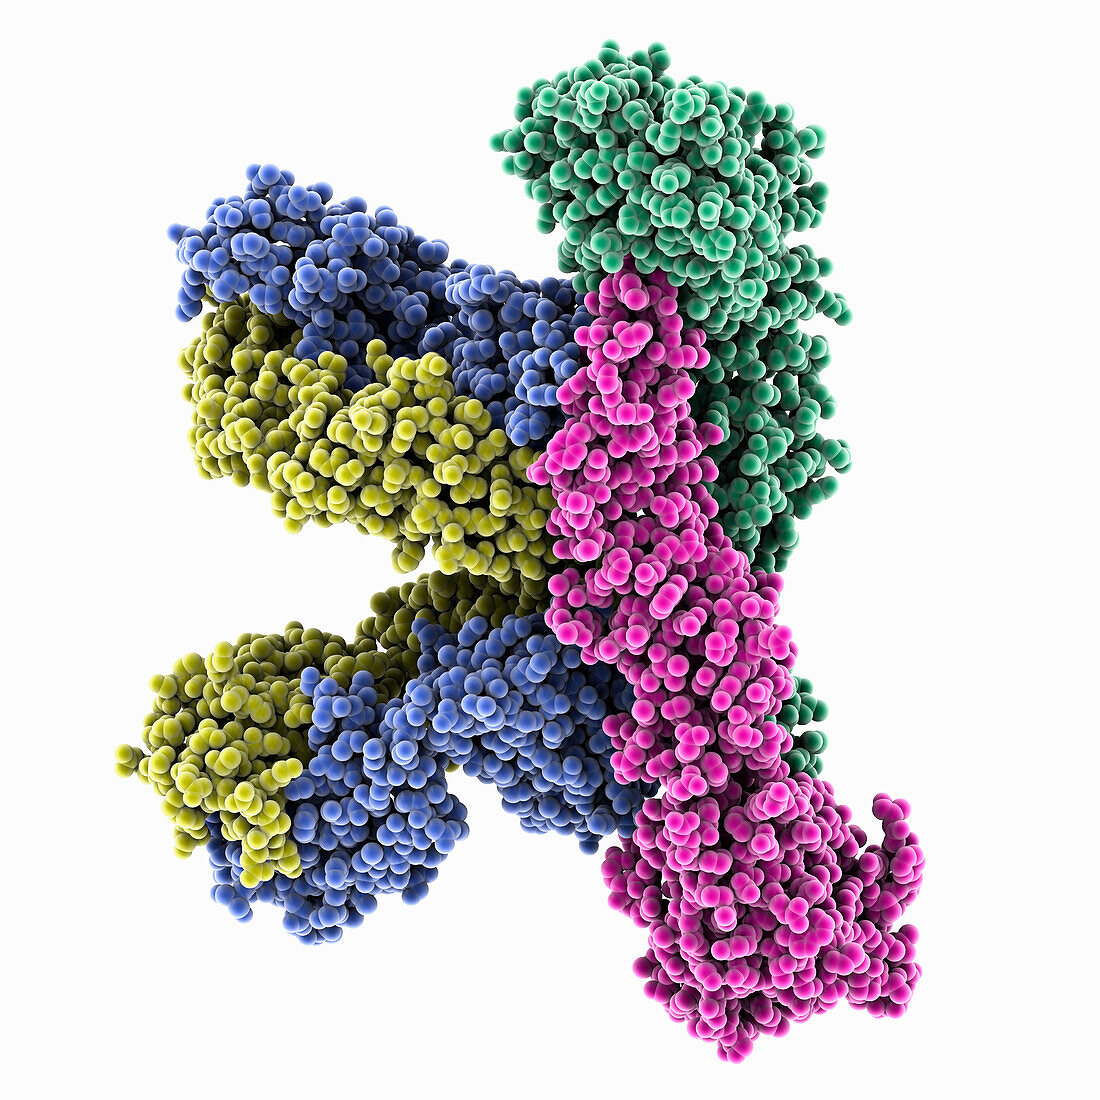 Zika virus envelope protein complex, illustration